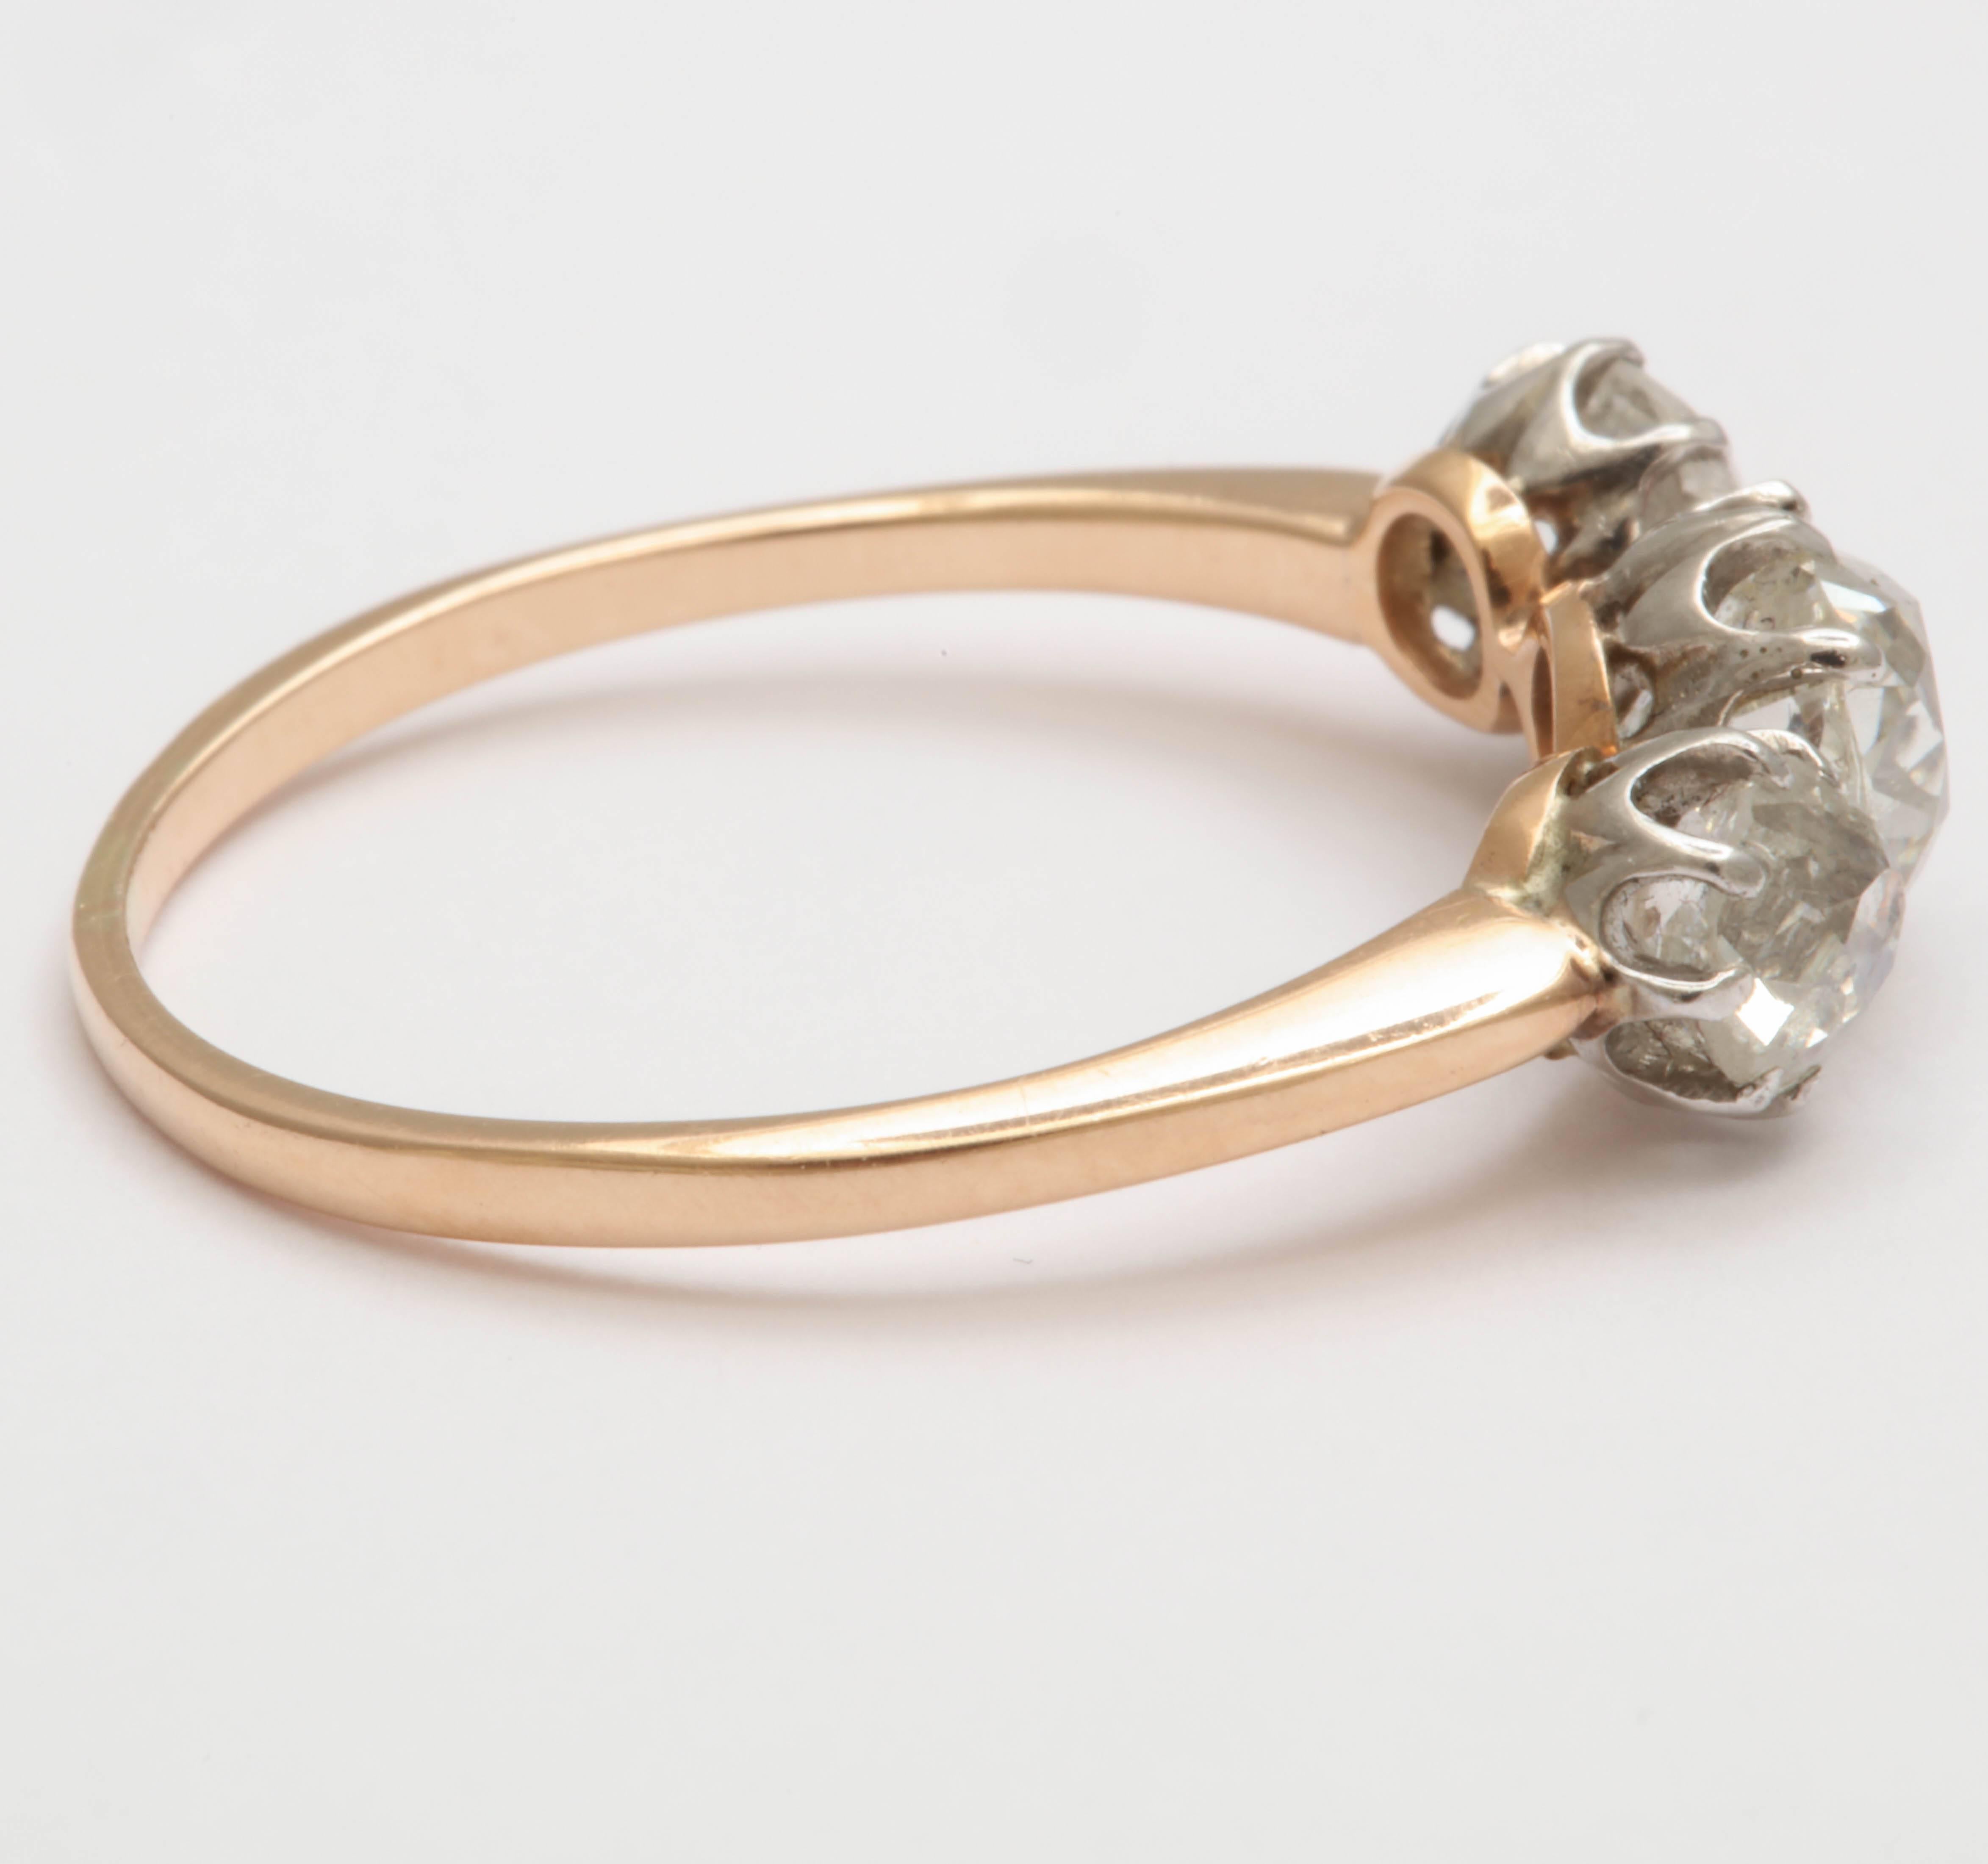 Women's 1.32 Carat Victorian Old Mine Cut Diamond Ring